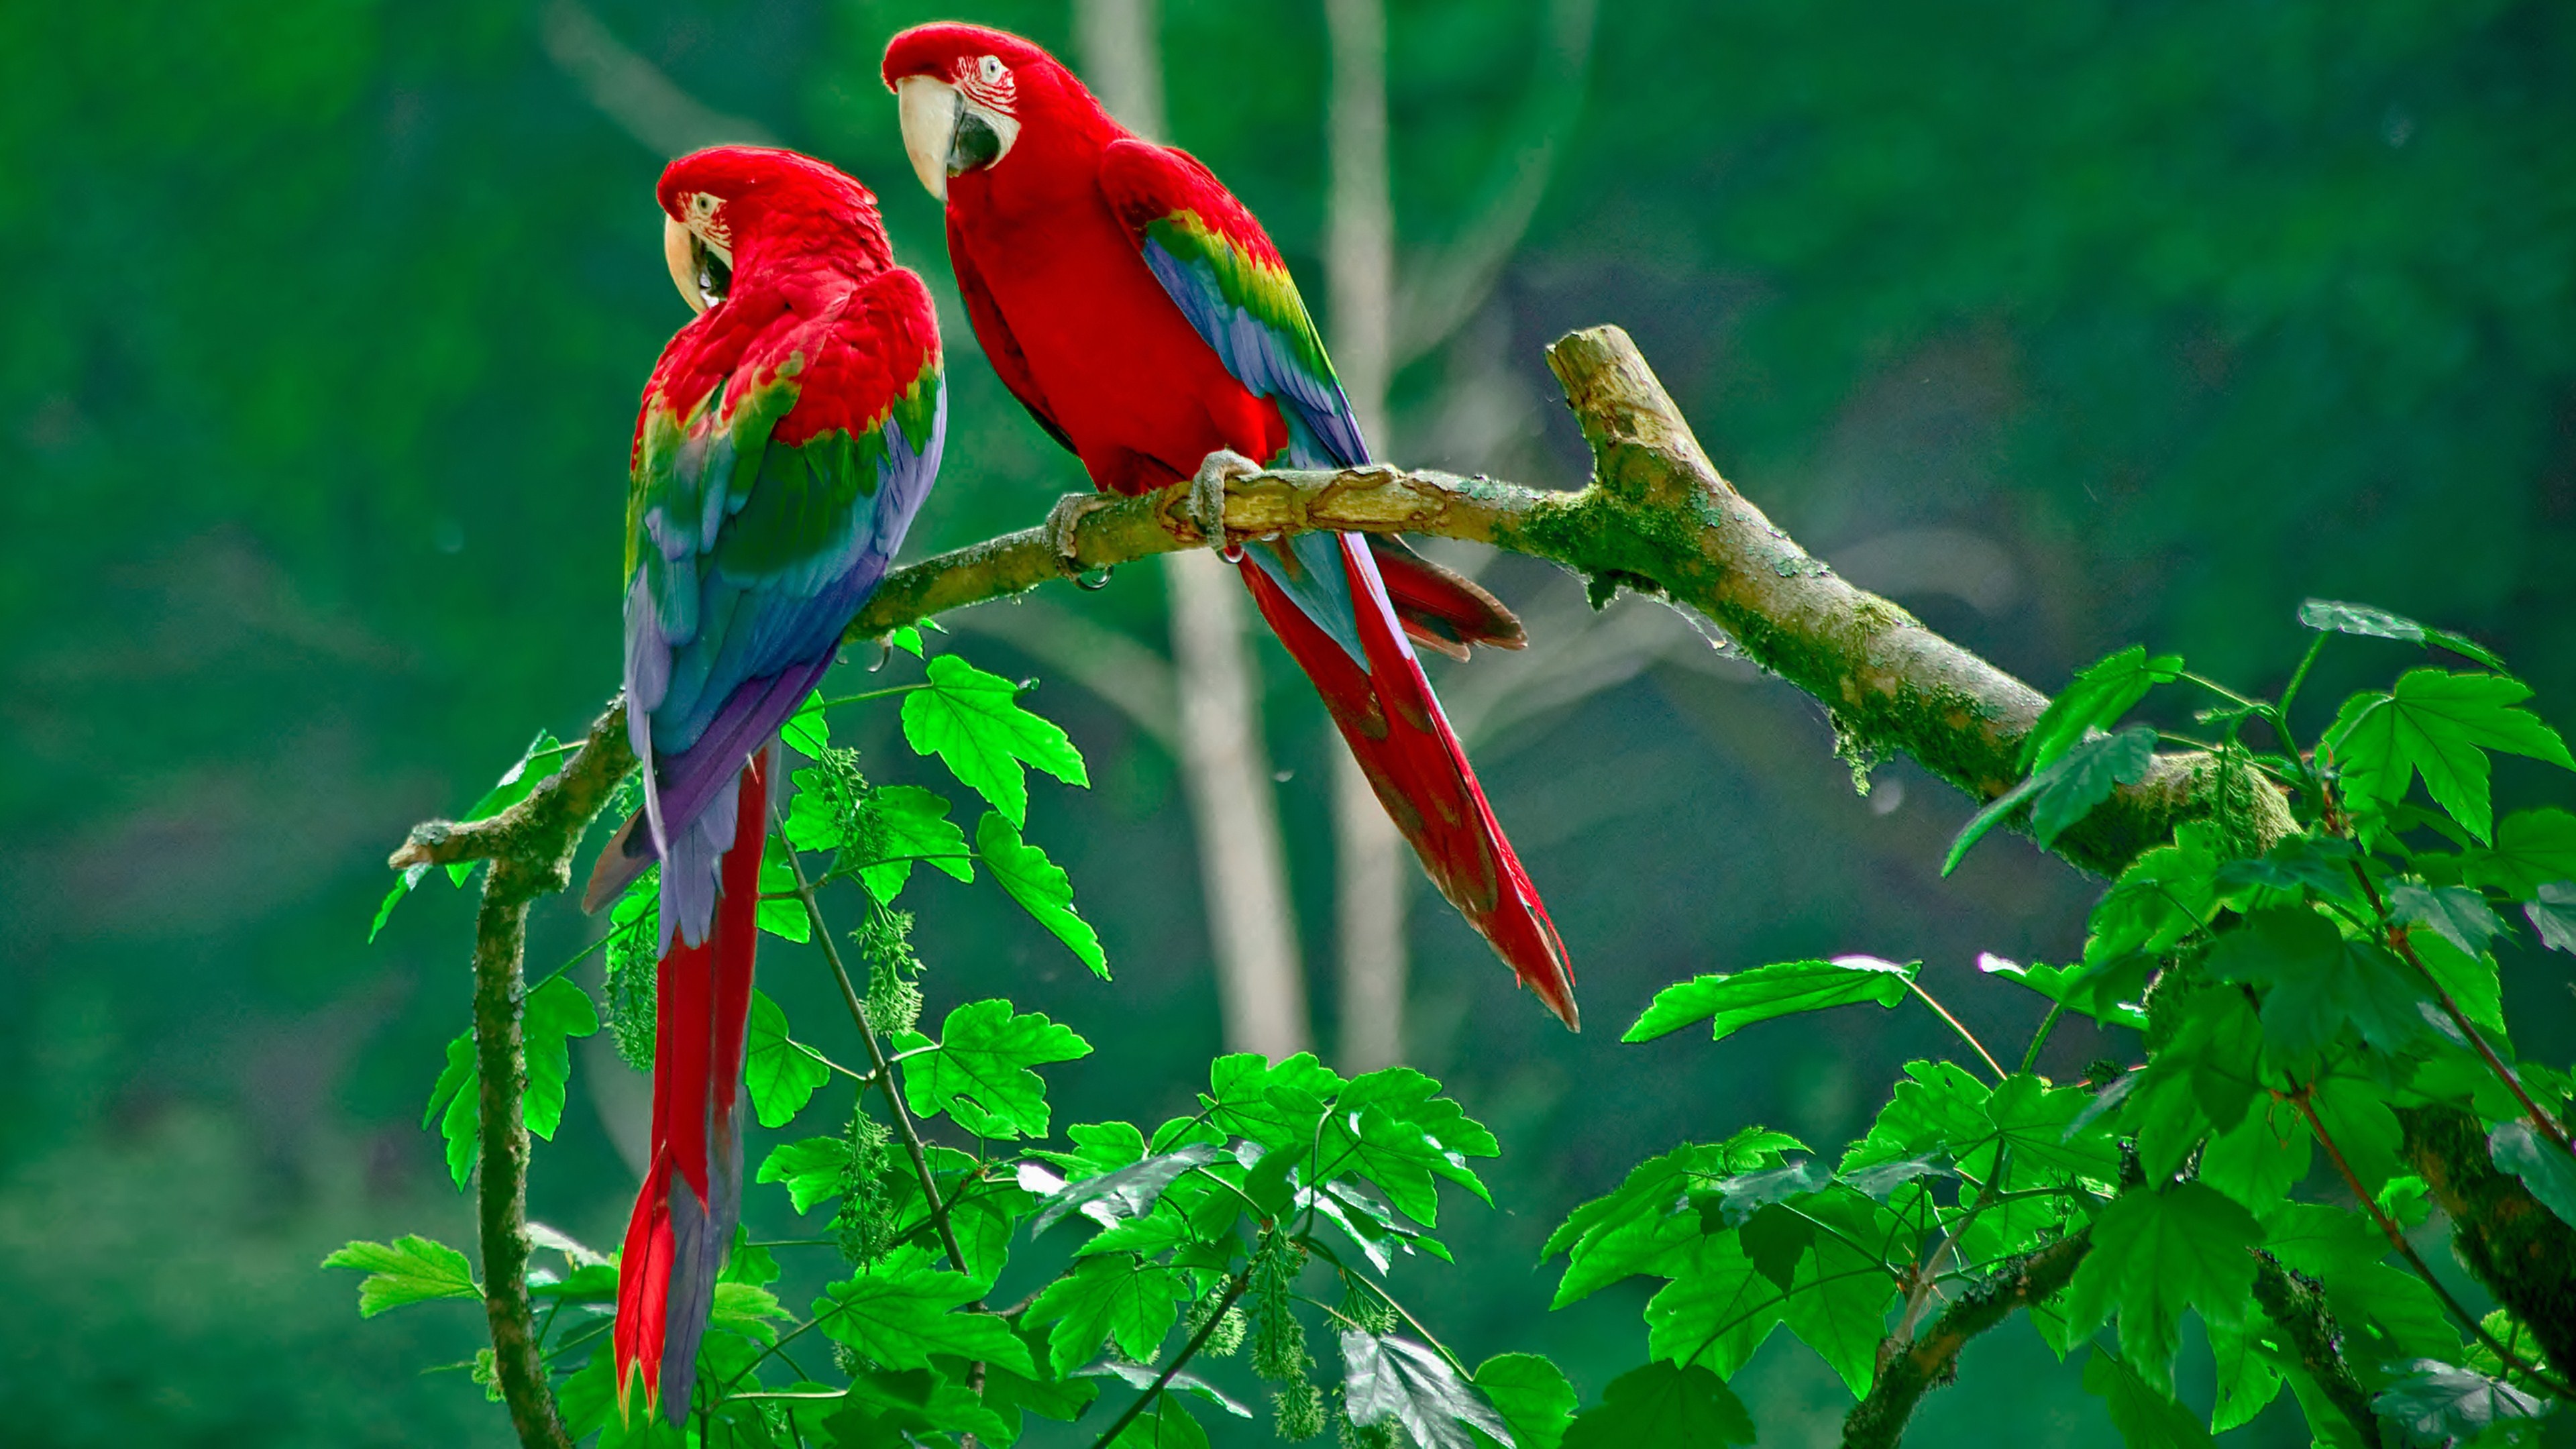 Parrot vs Macaw